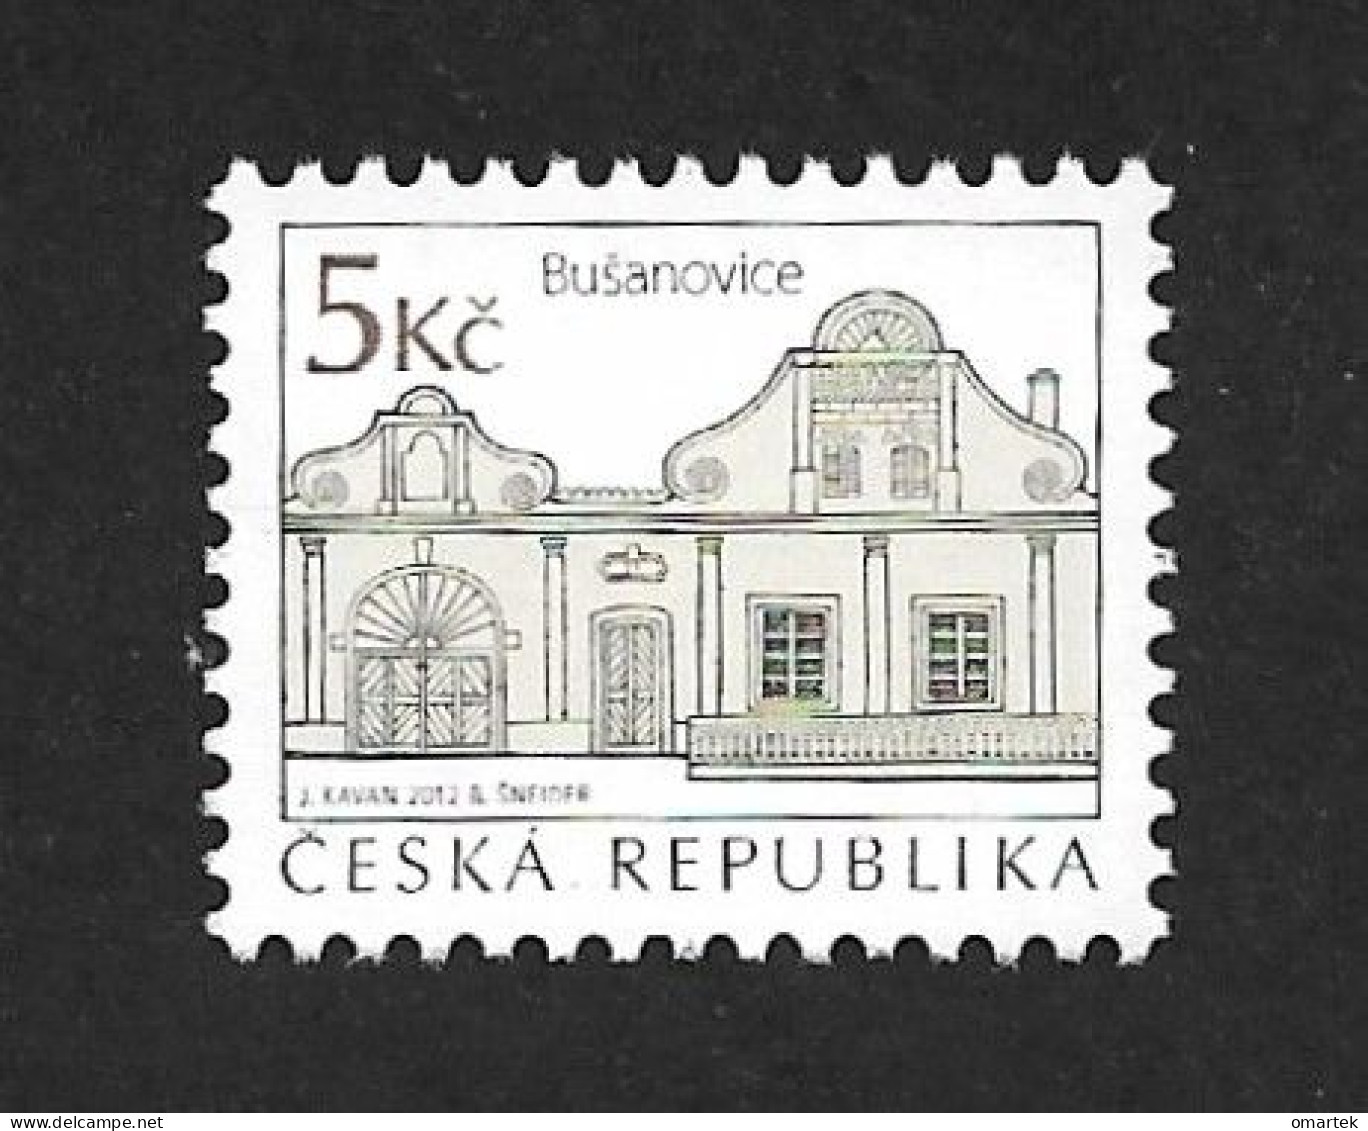 Czech Republic 2012 MNH ** Mi 753 Sc 3558 Folk Architecture - Busanovice.Tschechische Republik - Neufs